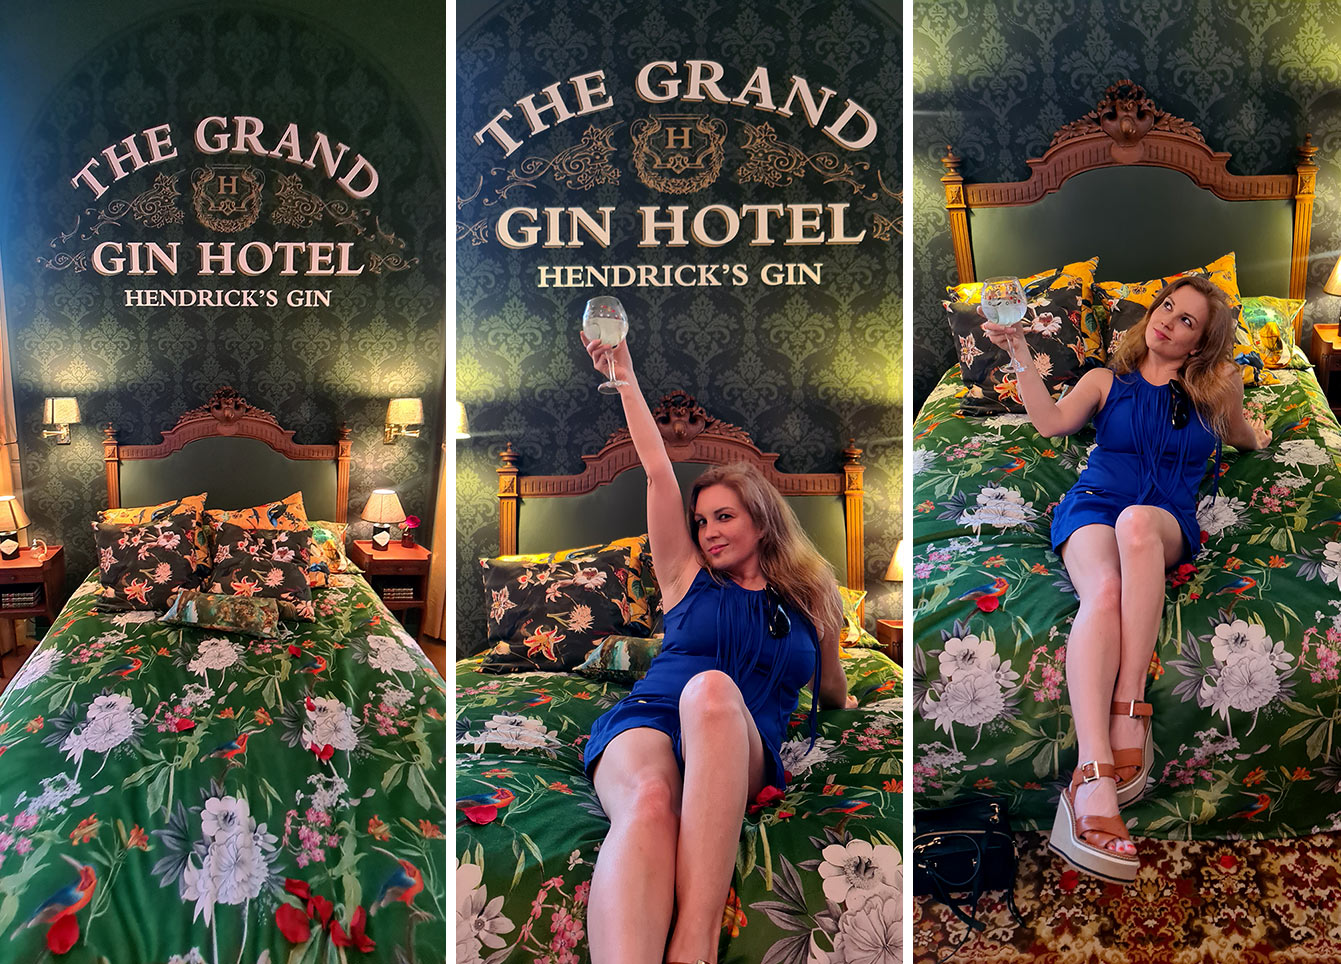 Hendrick’s Gin : "The Grand Gin Hotel"